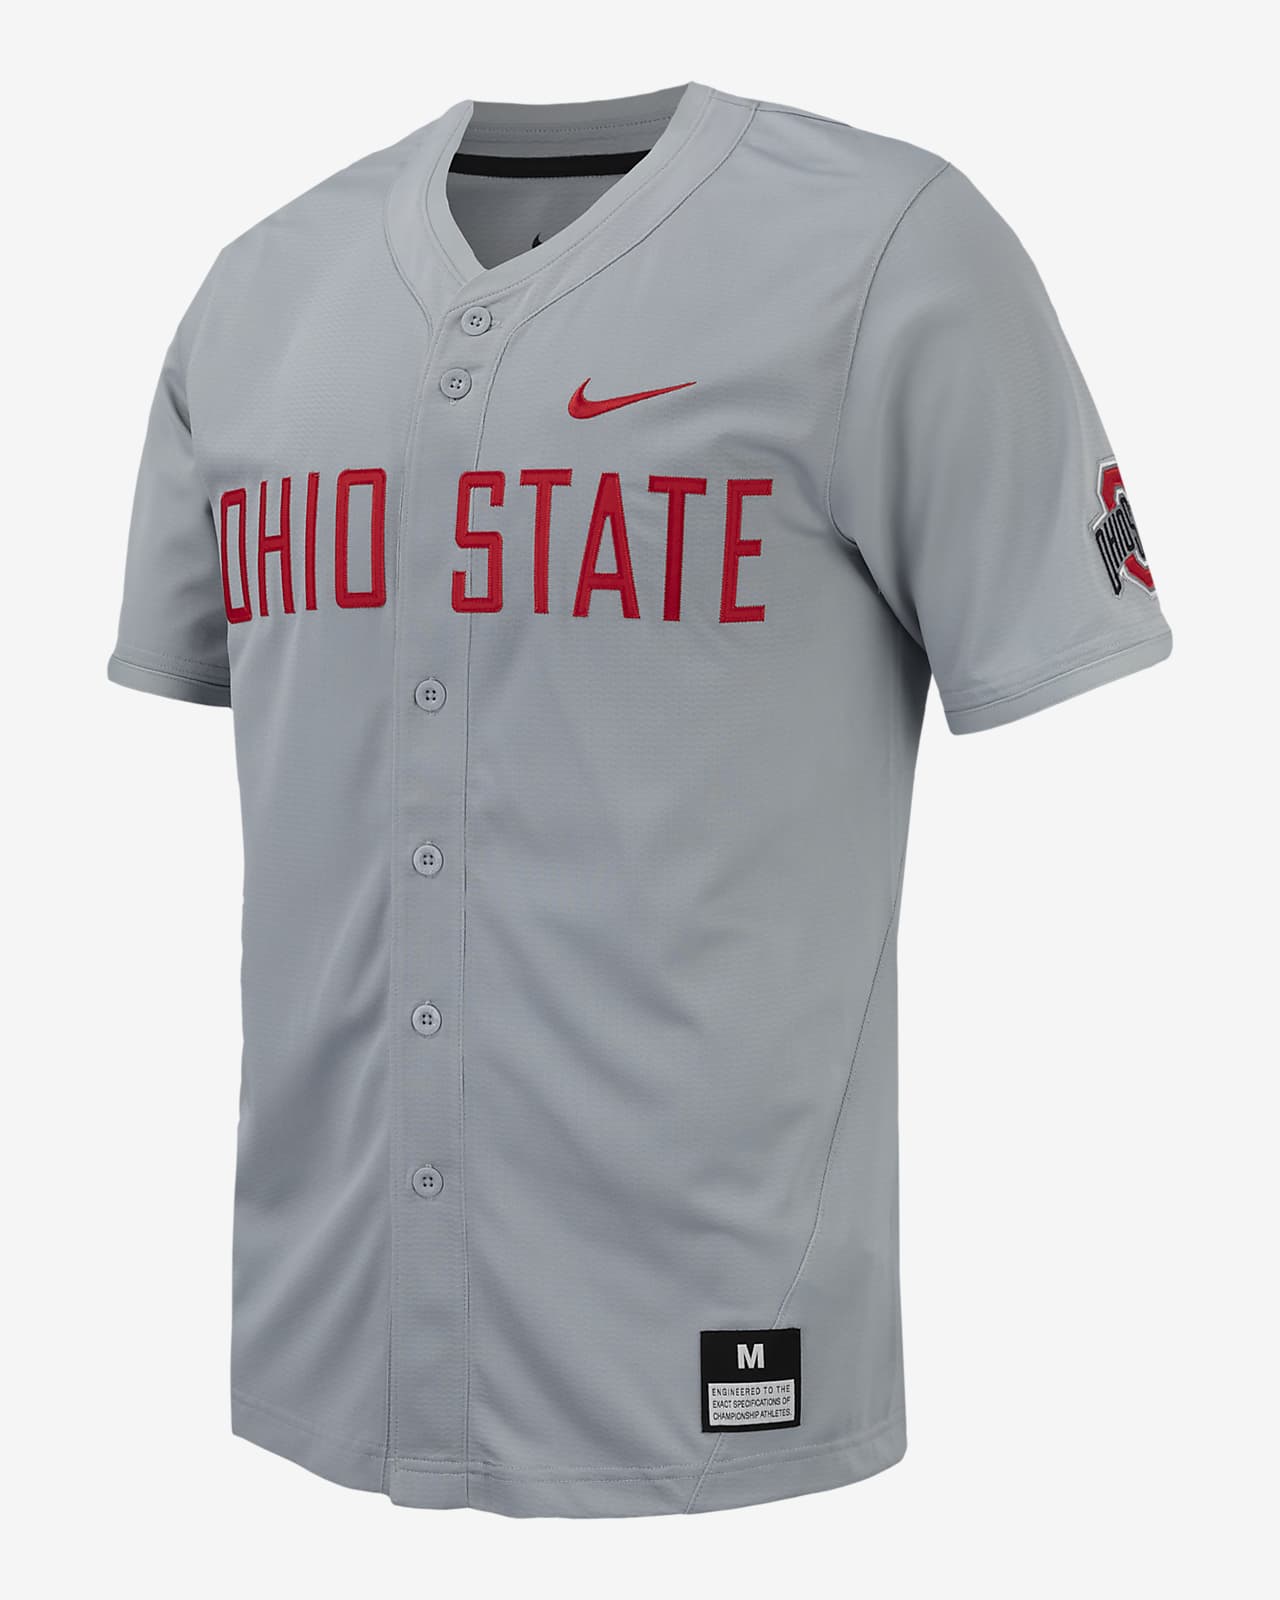 Jersey de béisbol universitario Nike Replica para hombre Ohio State